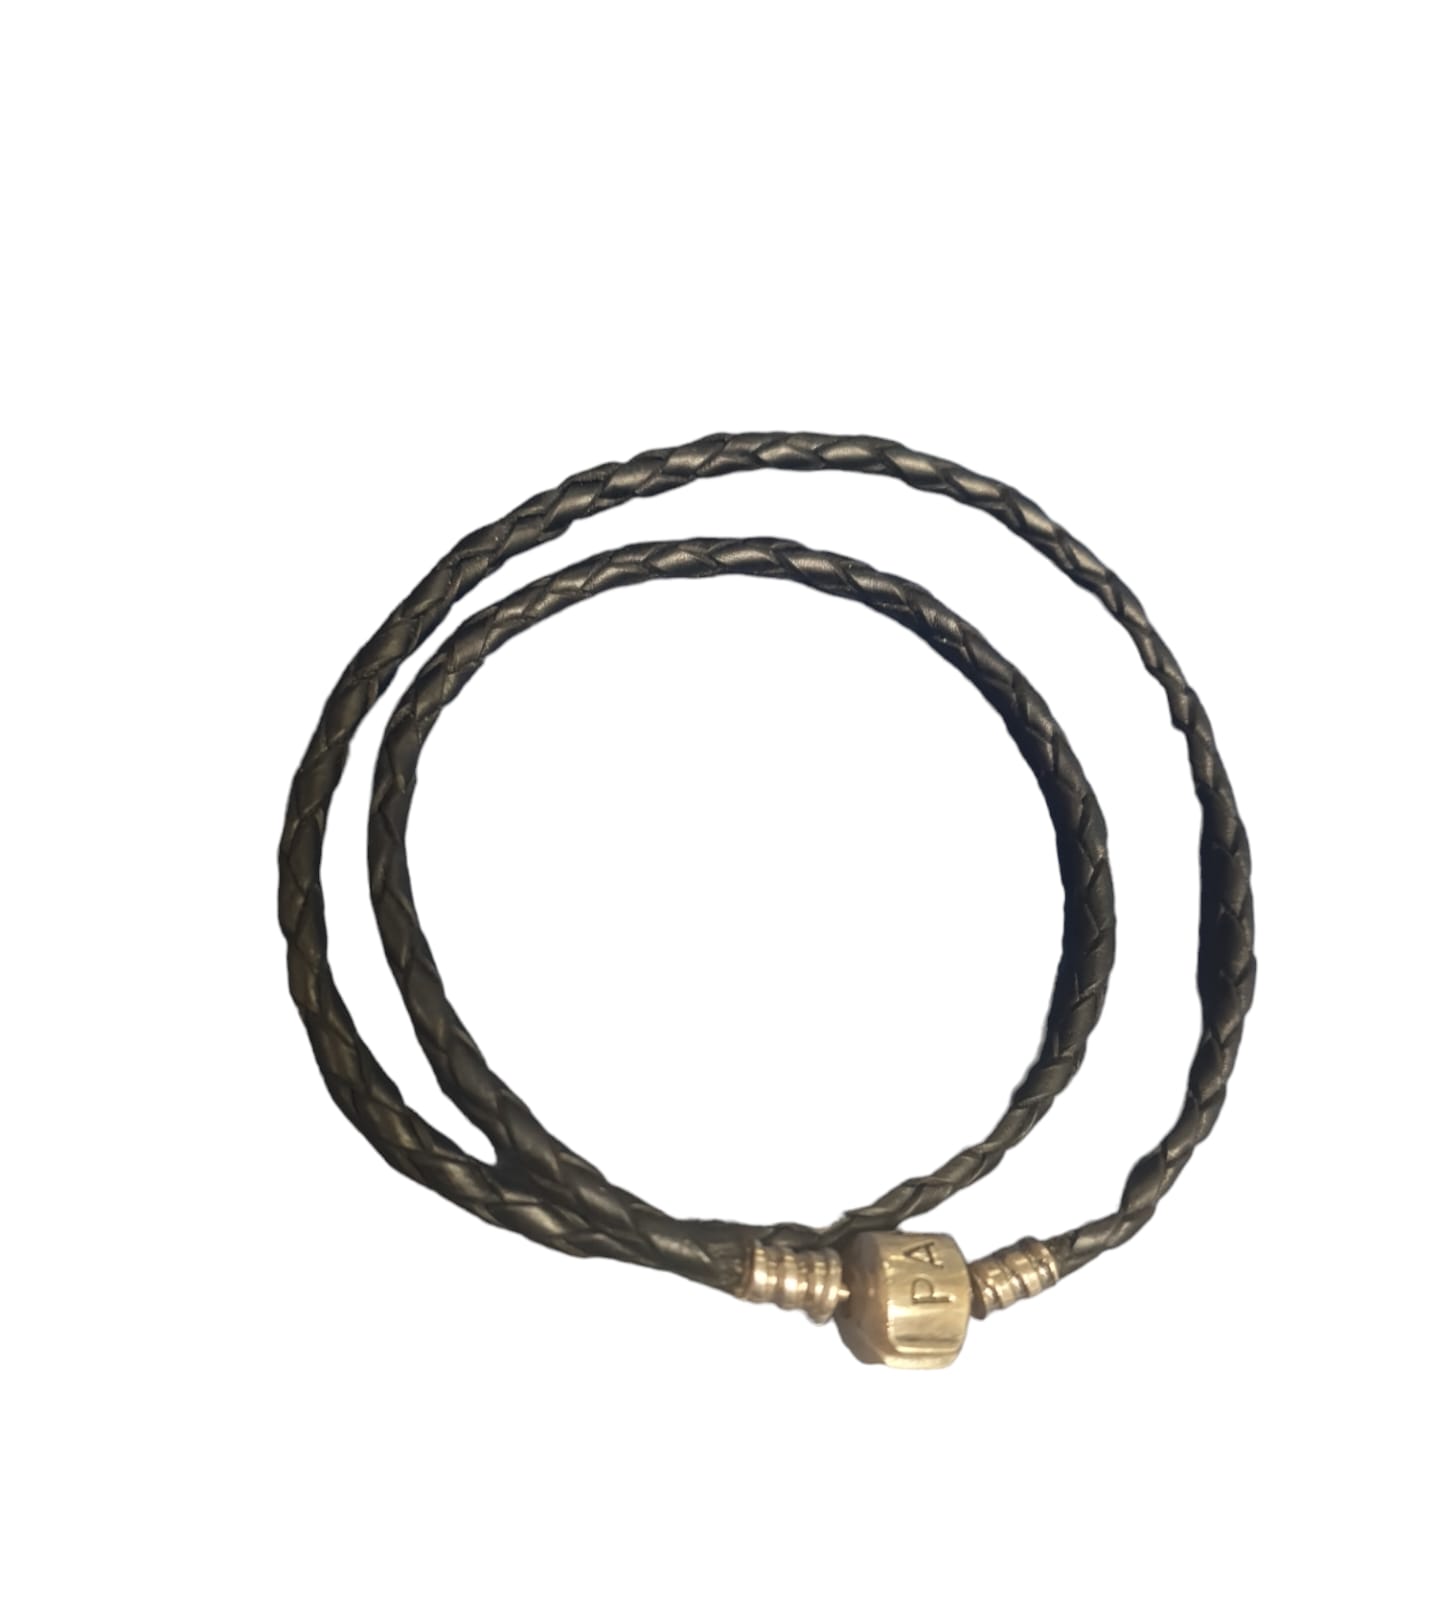 Pandora Black Woven Leather Bracelet